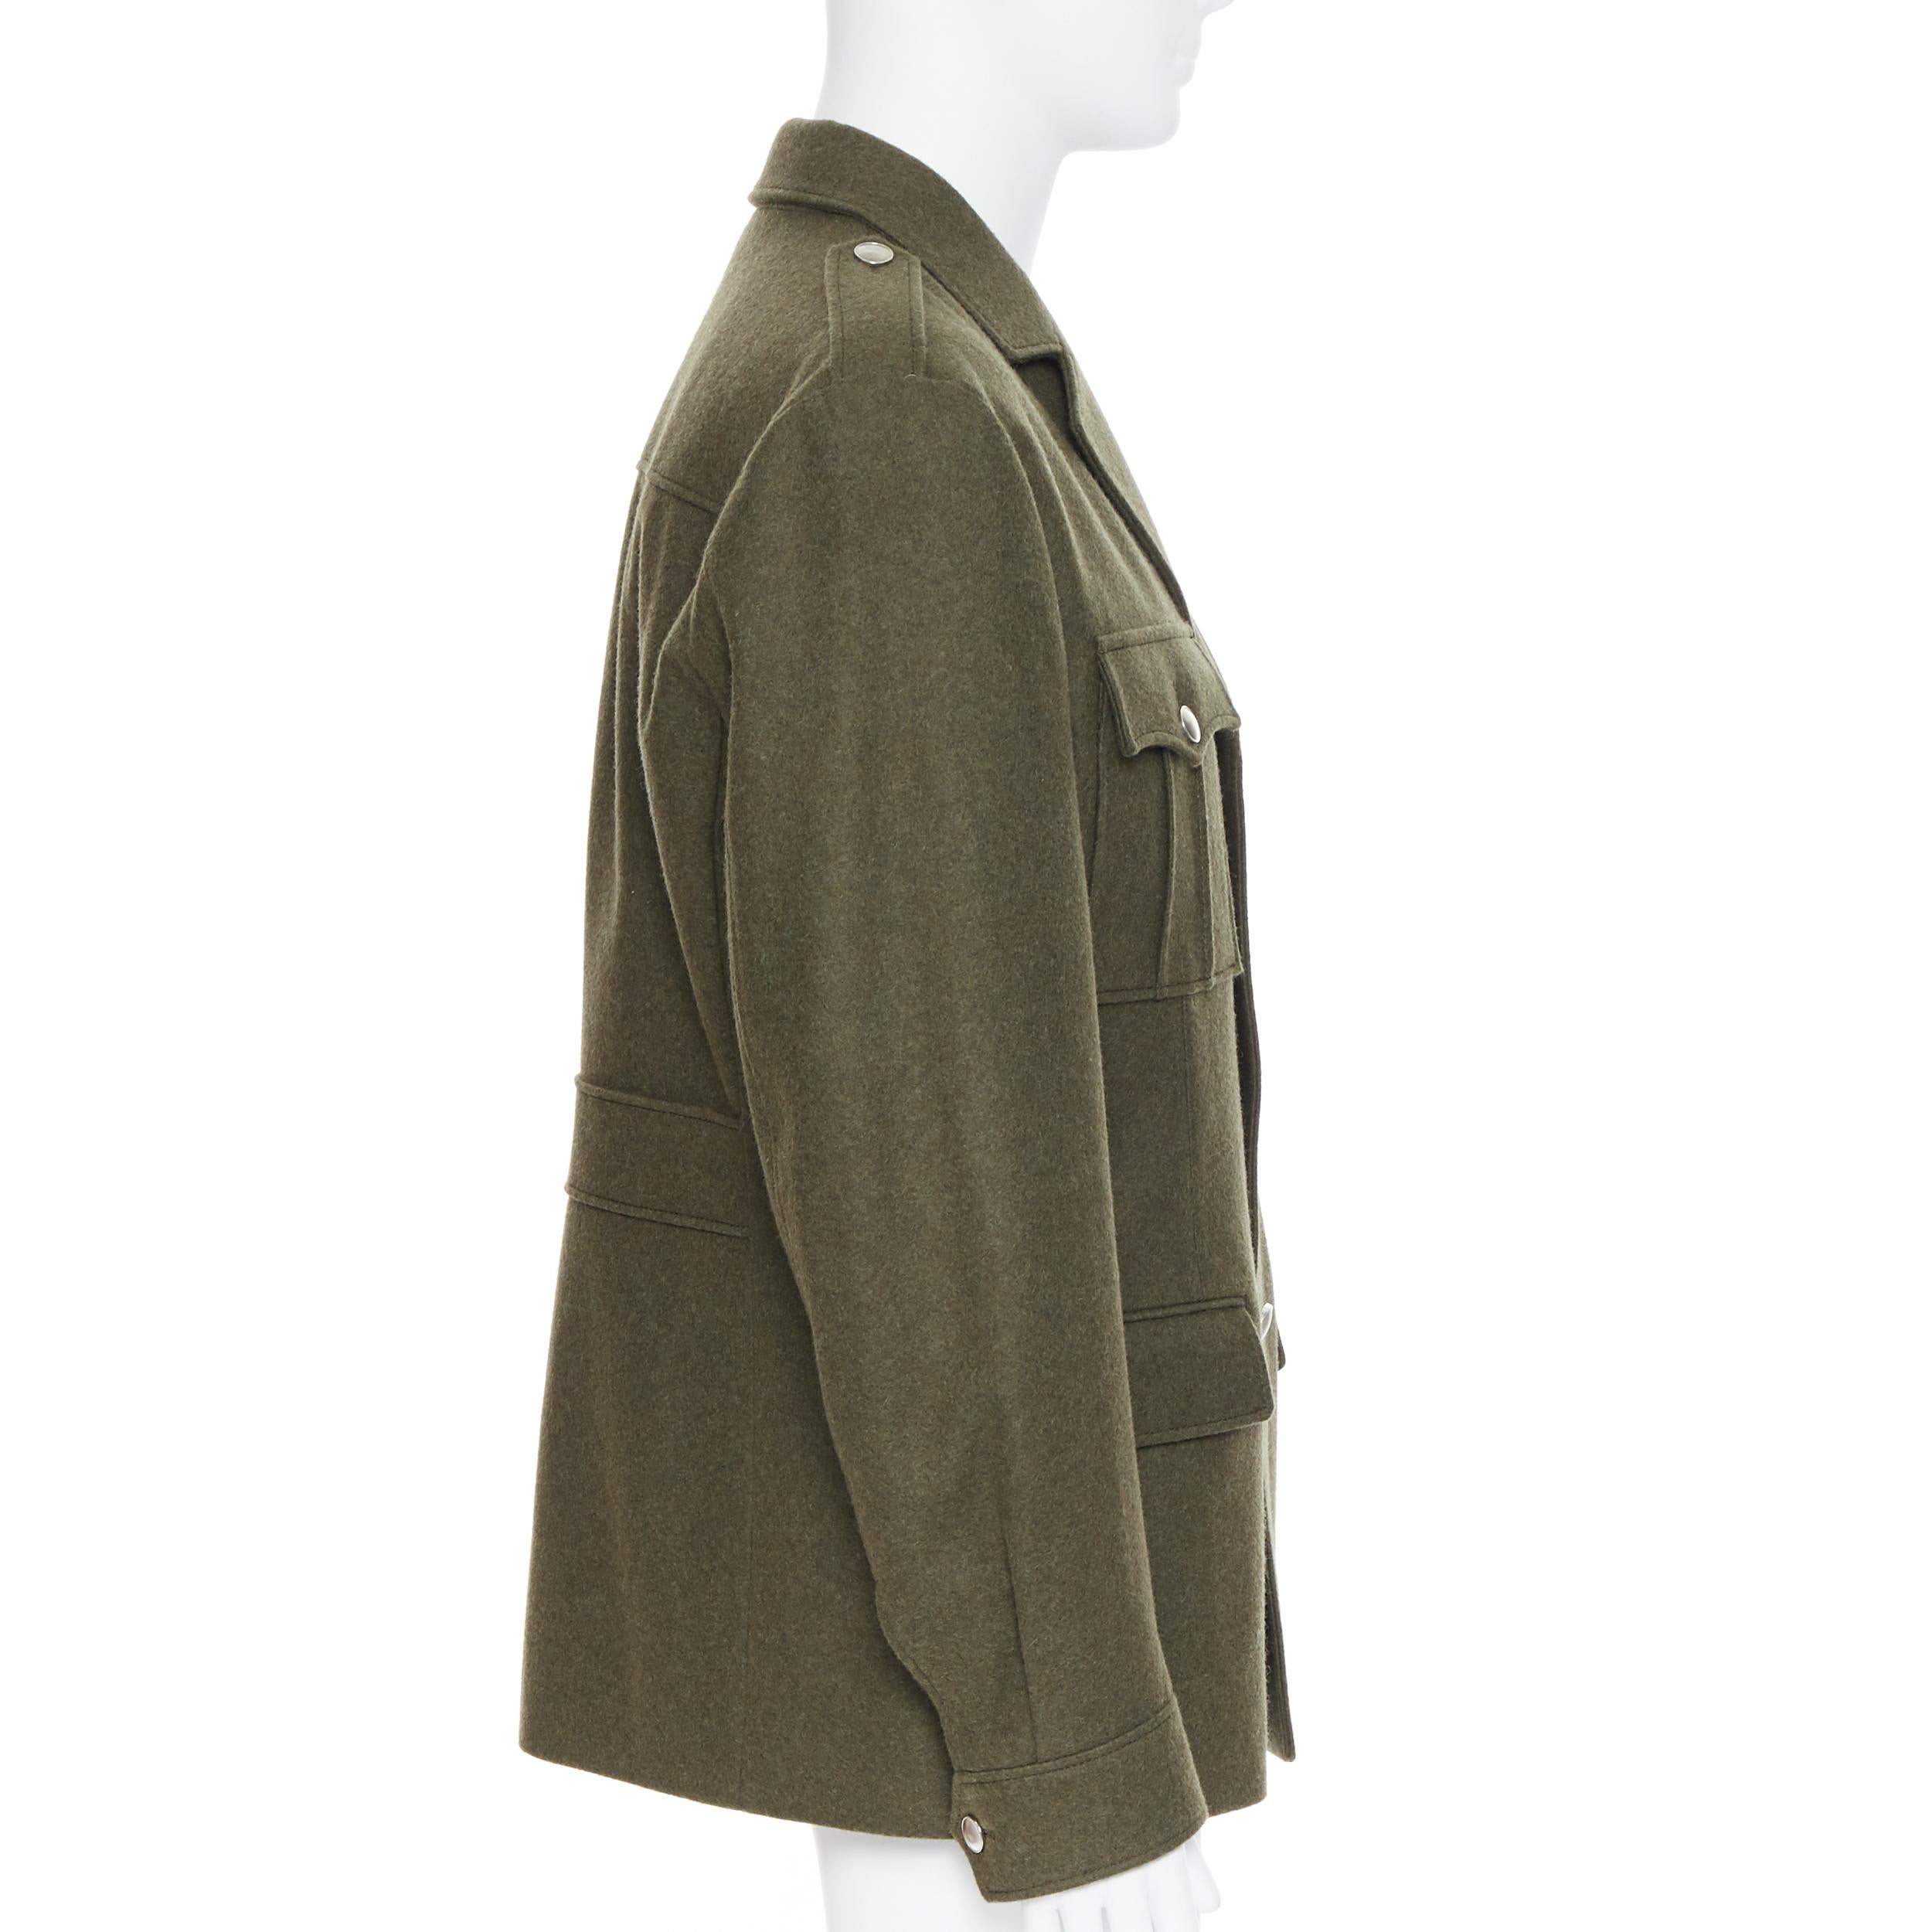 Men's new PRADA 2019 Runway 100% virgin wool green military pocket jacket coat IT50 L